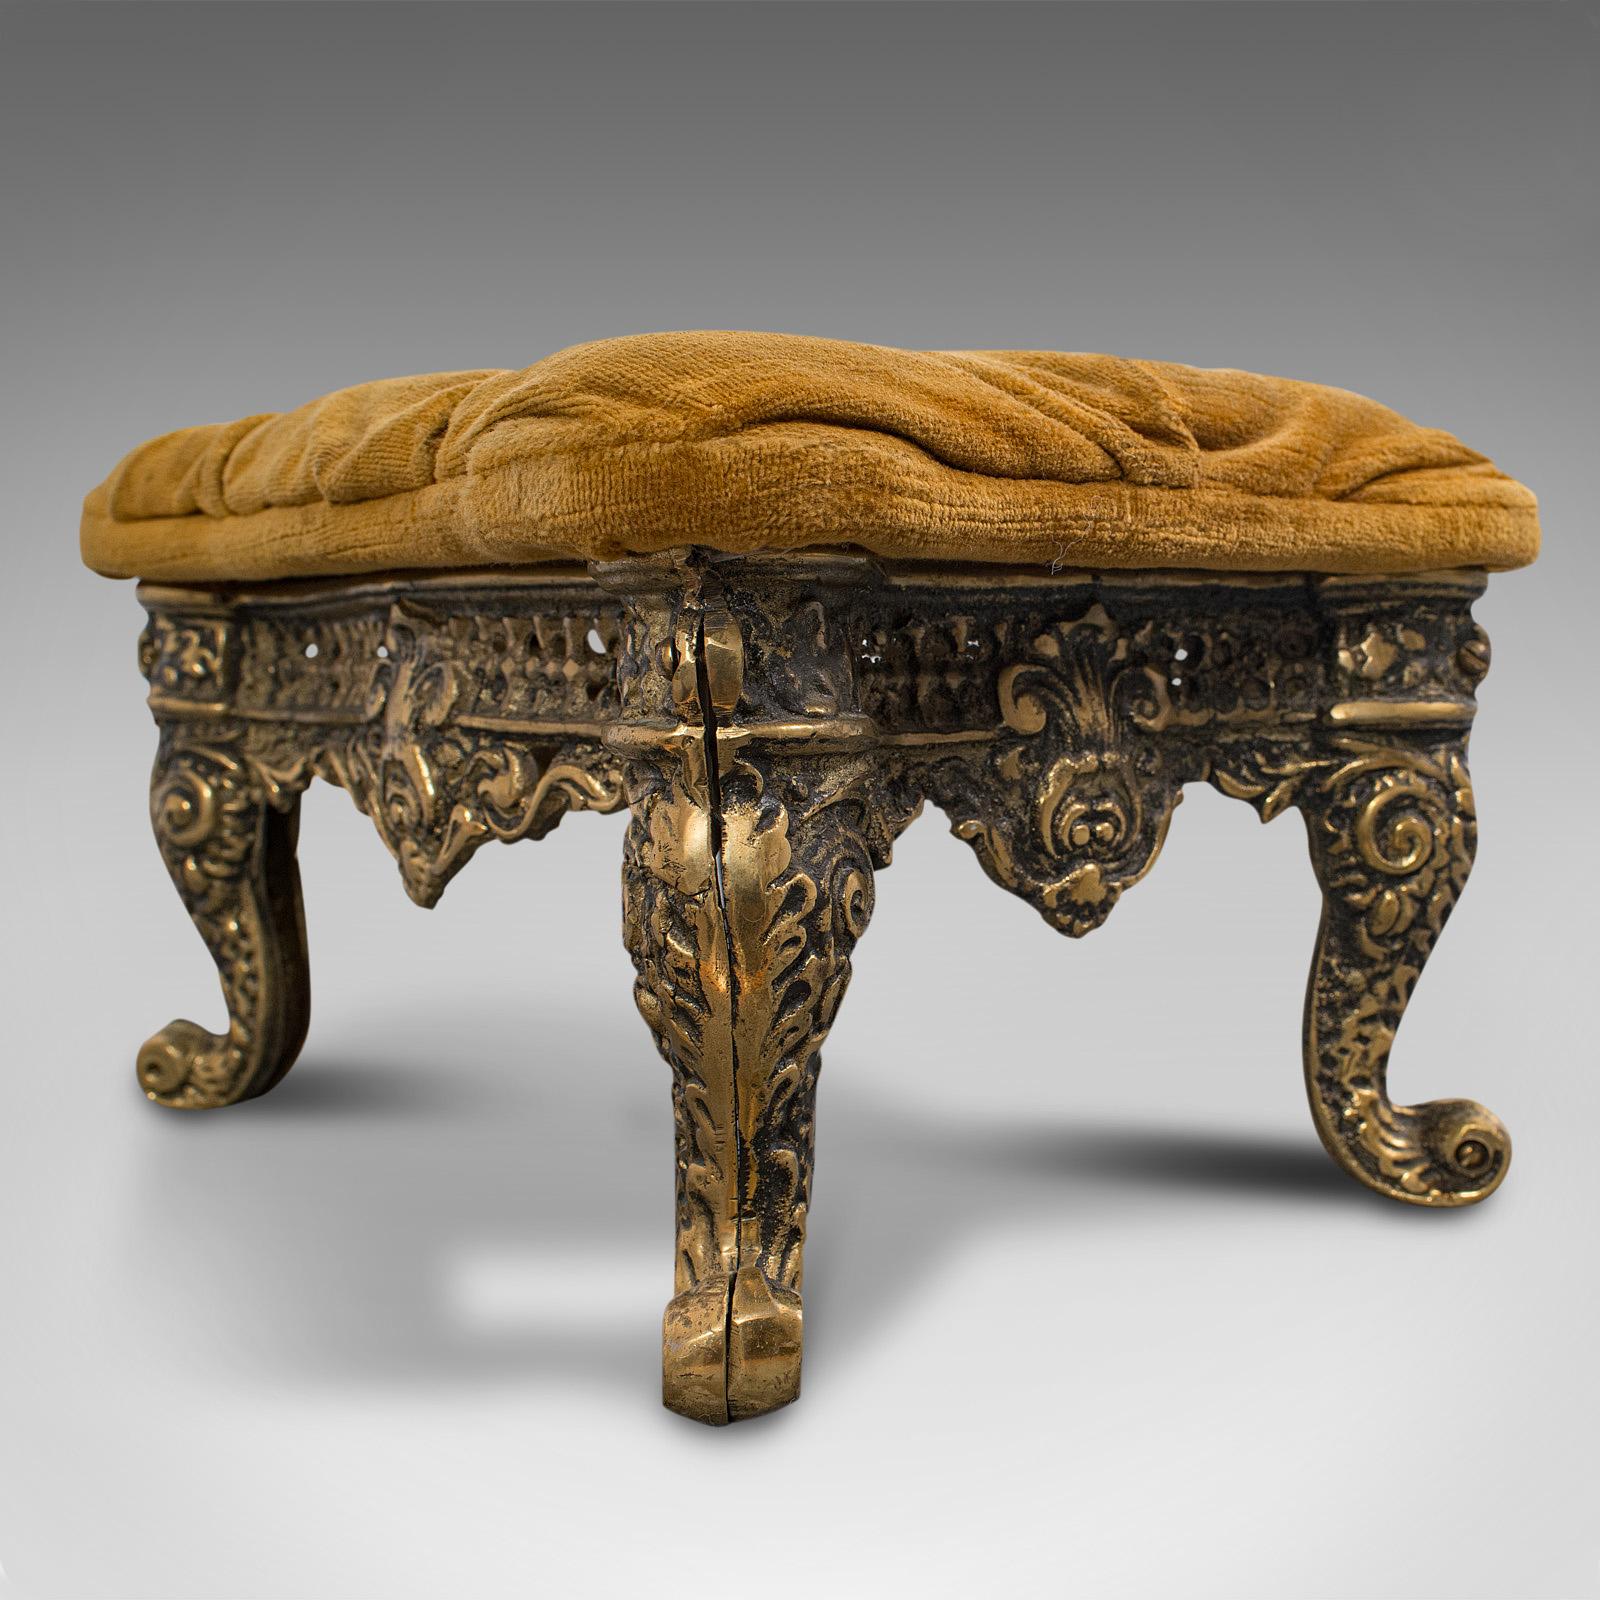 Antique Decorative Footstool, Italian, Gilt, Stool, Baroque Revival, circa 1900 5